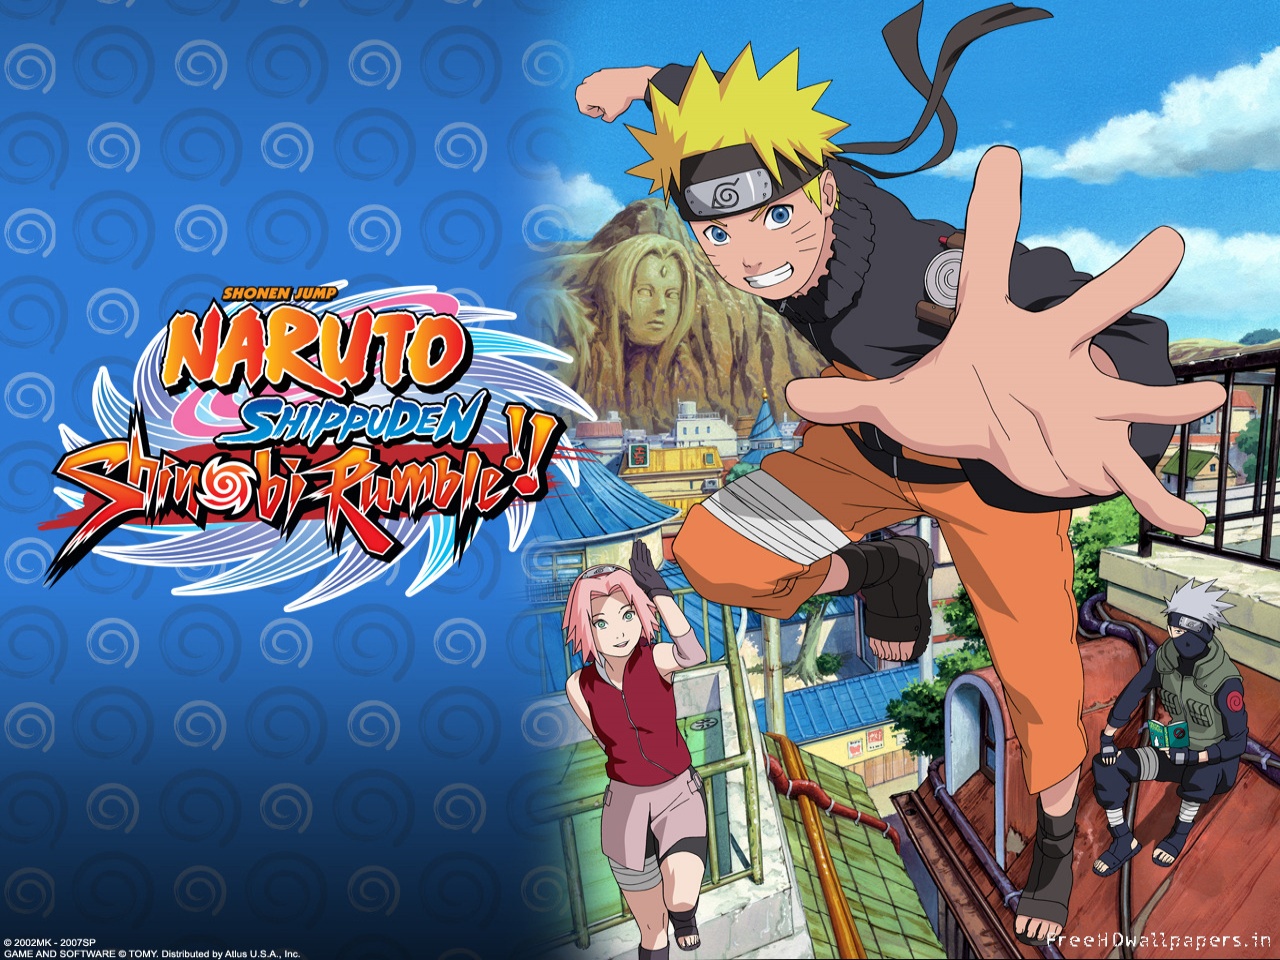 Наруто 2010. Naruto Shippuden Shinobi Rumble NDS. Naruto Shippuden - Shinobi Rumble. Naruto Shippuuden Shinobi. Naruto Shippūden: Shinobi Rumble.